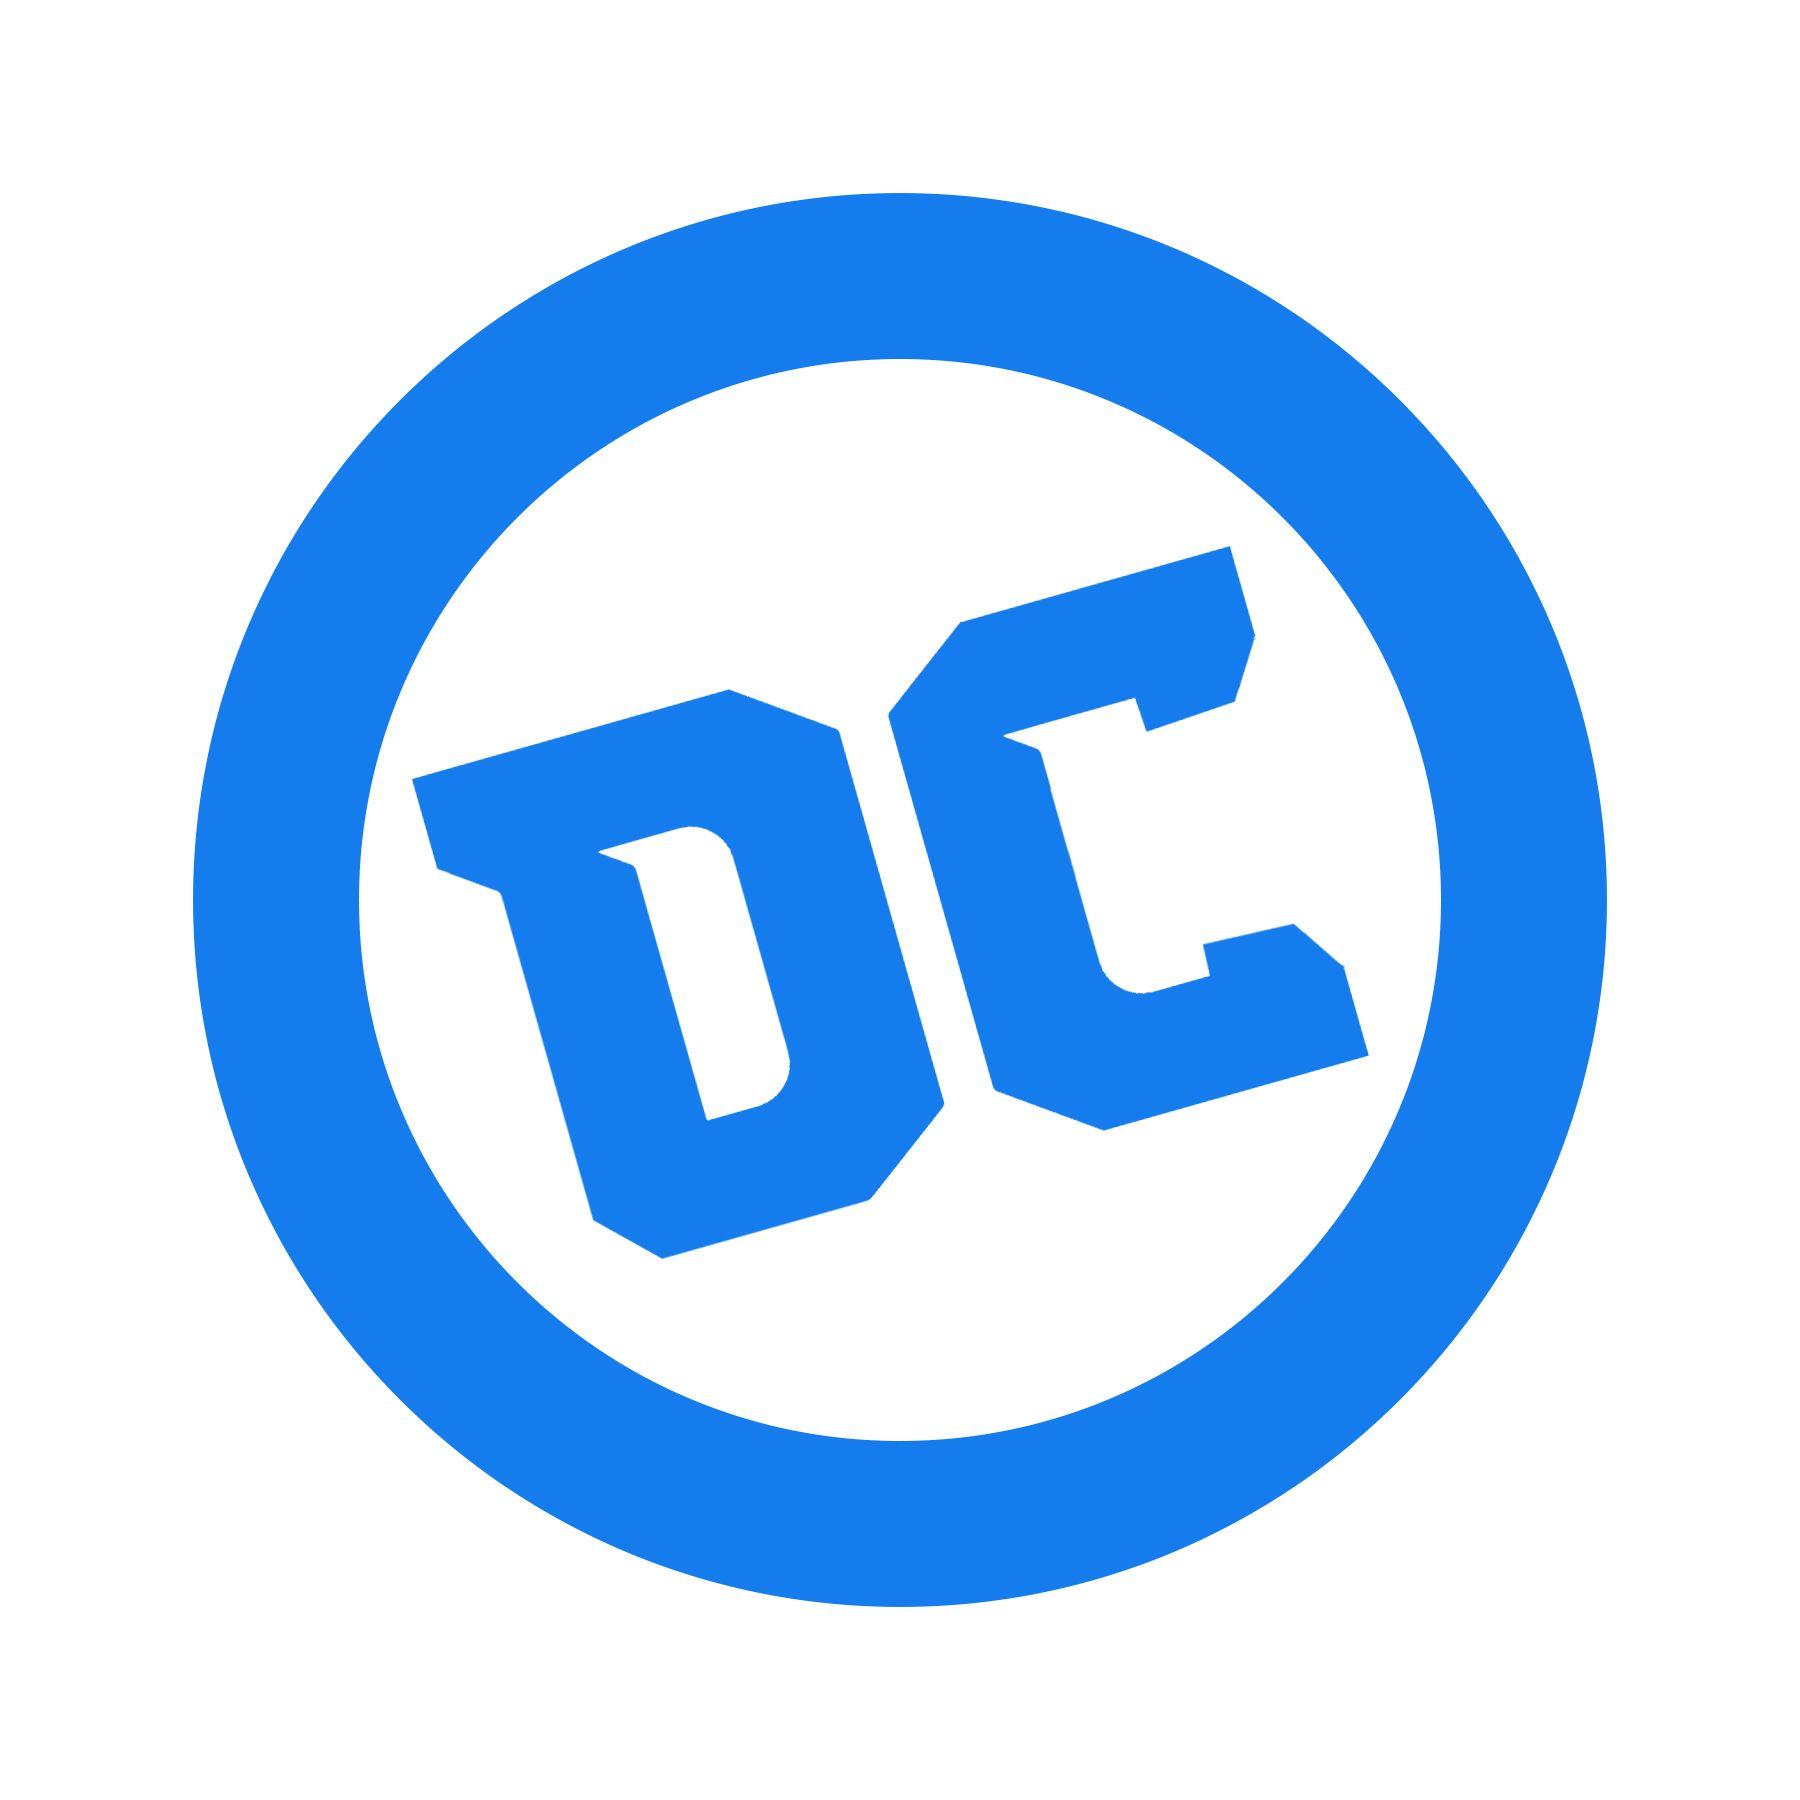 New DC Logo - New DC logo - QBN